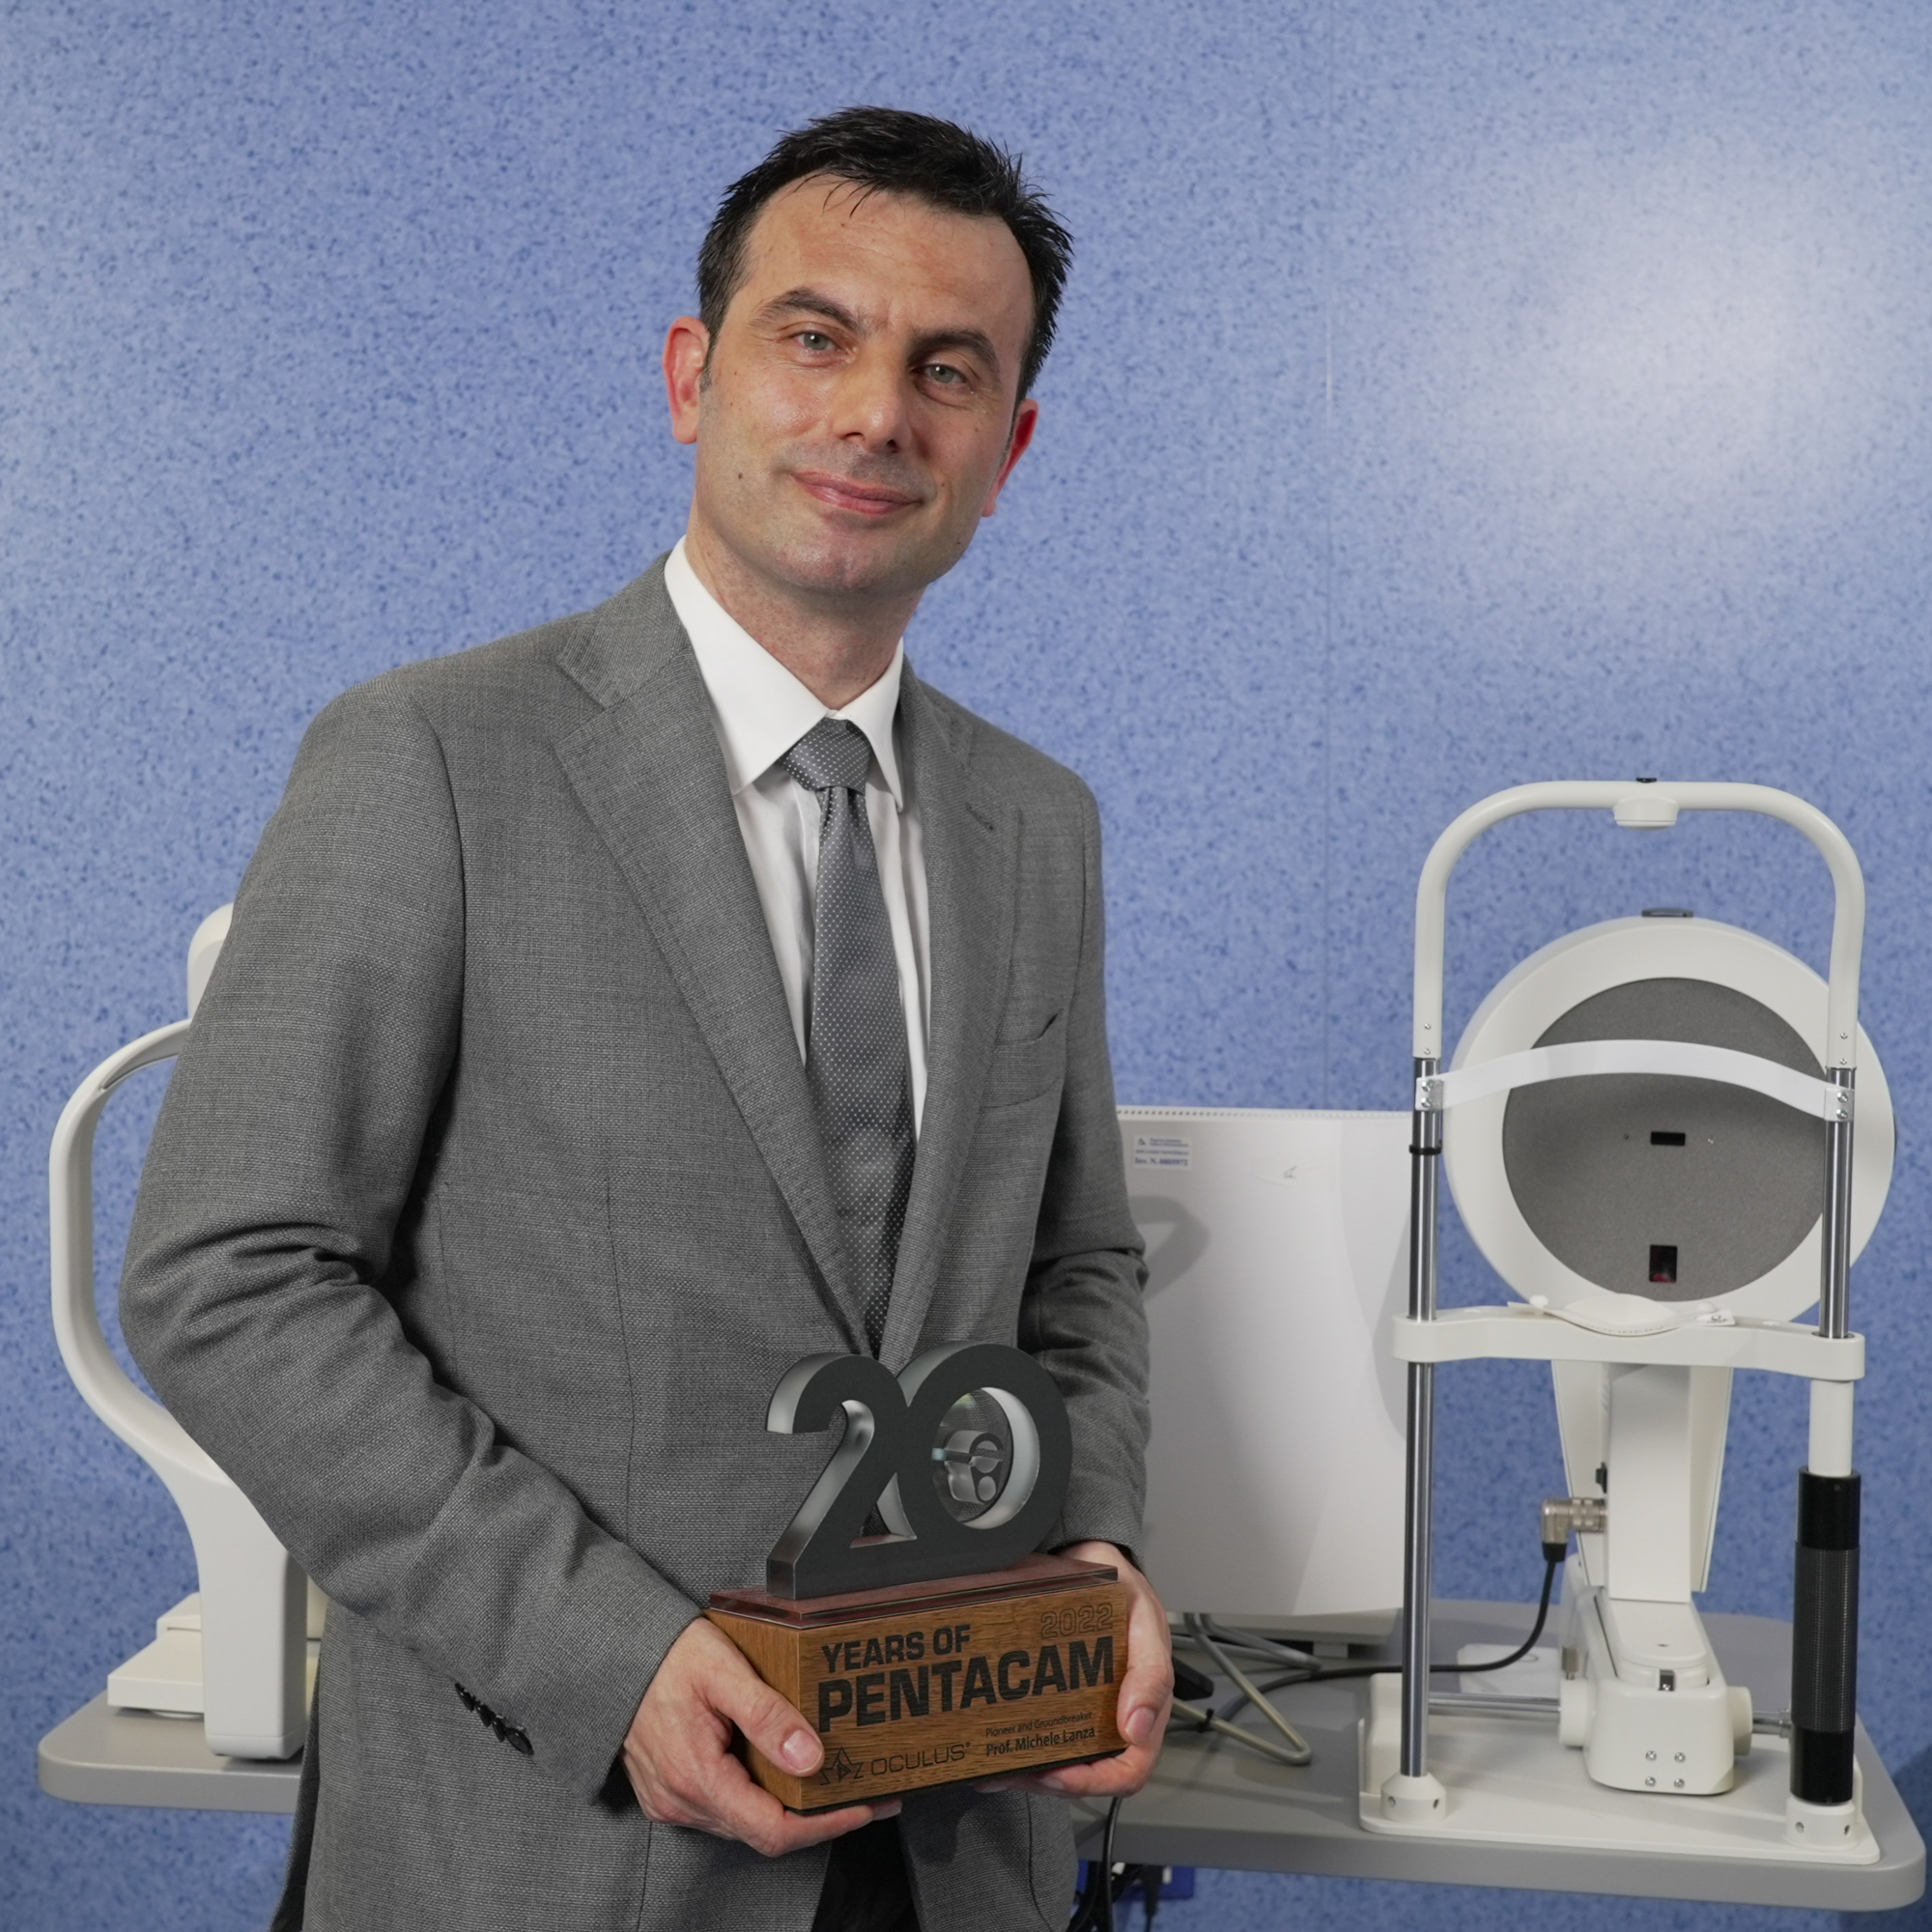 Prof Michele Lanza holding his 20th Anniversary Pentacam® Trophy